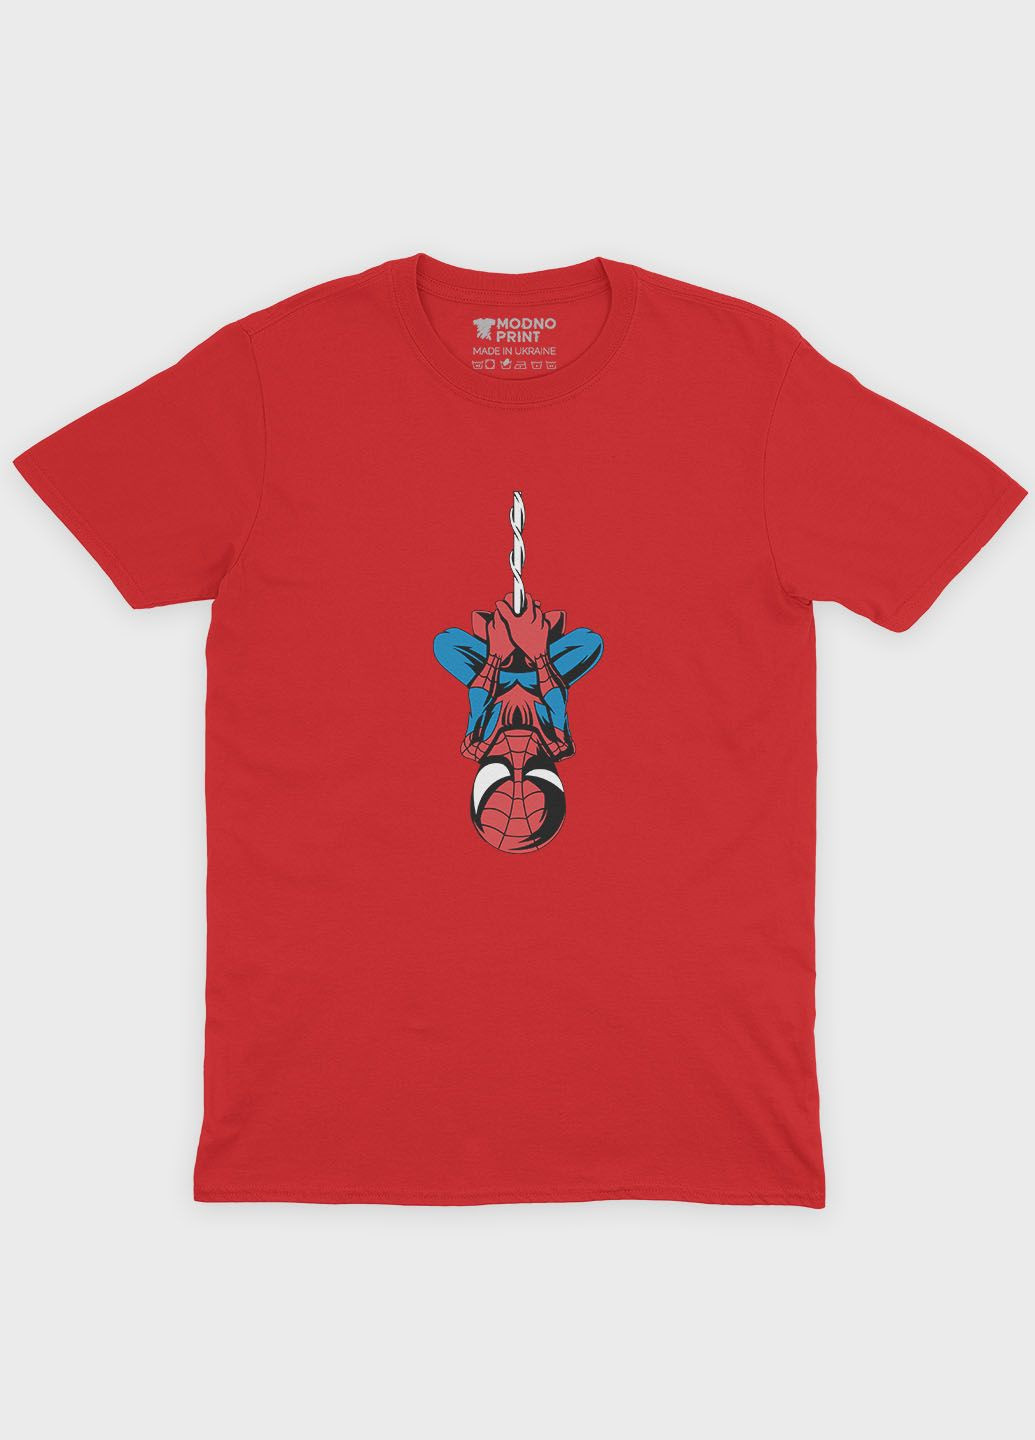 Червона демісезонна футболка для хлопчика з принтом супергероя - людина-павук (ts001-1-sre-006-014-085-b) Modno